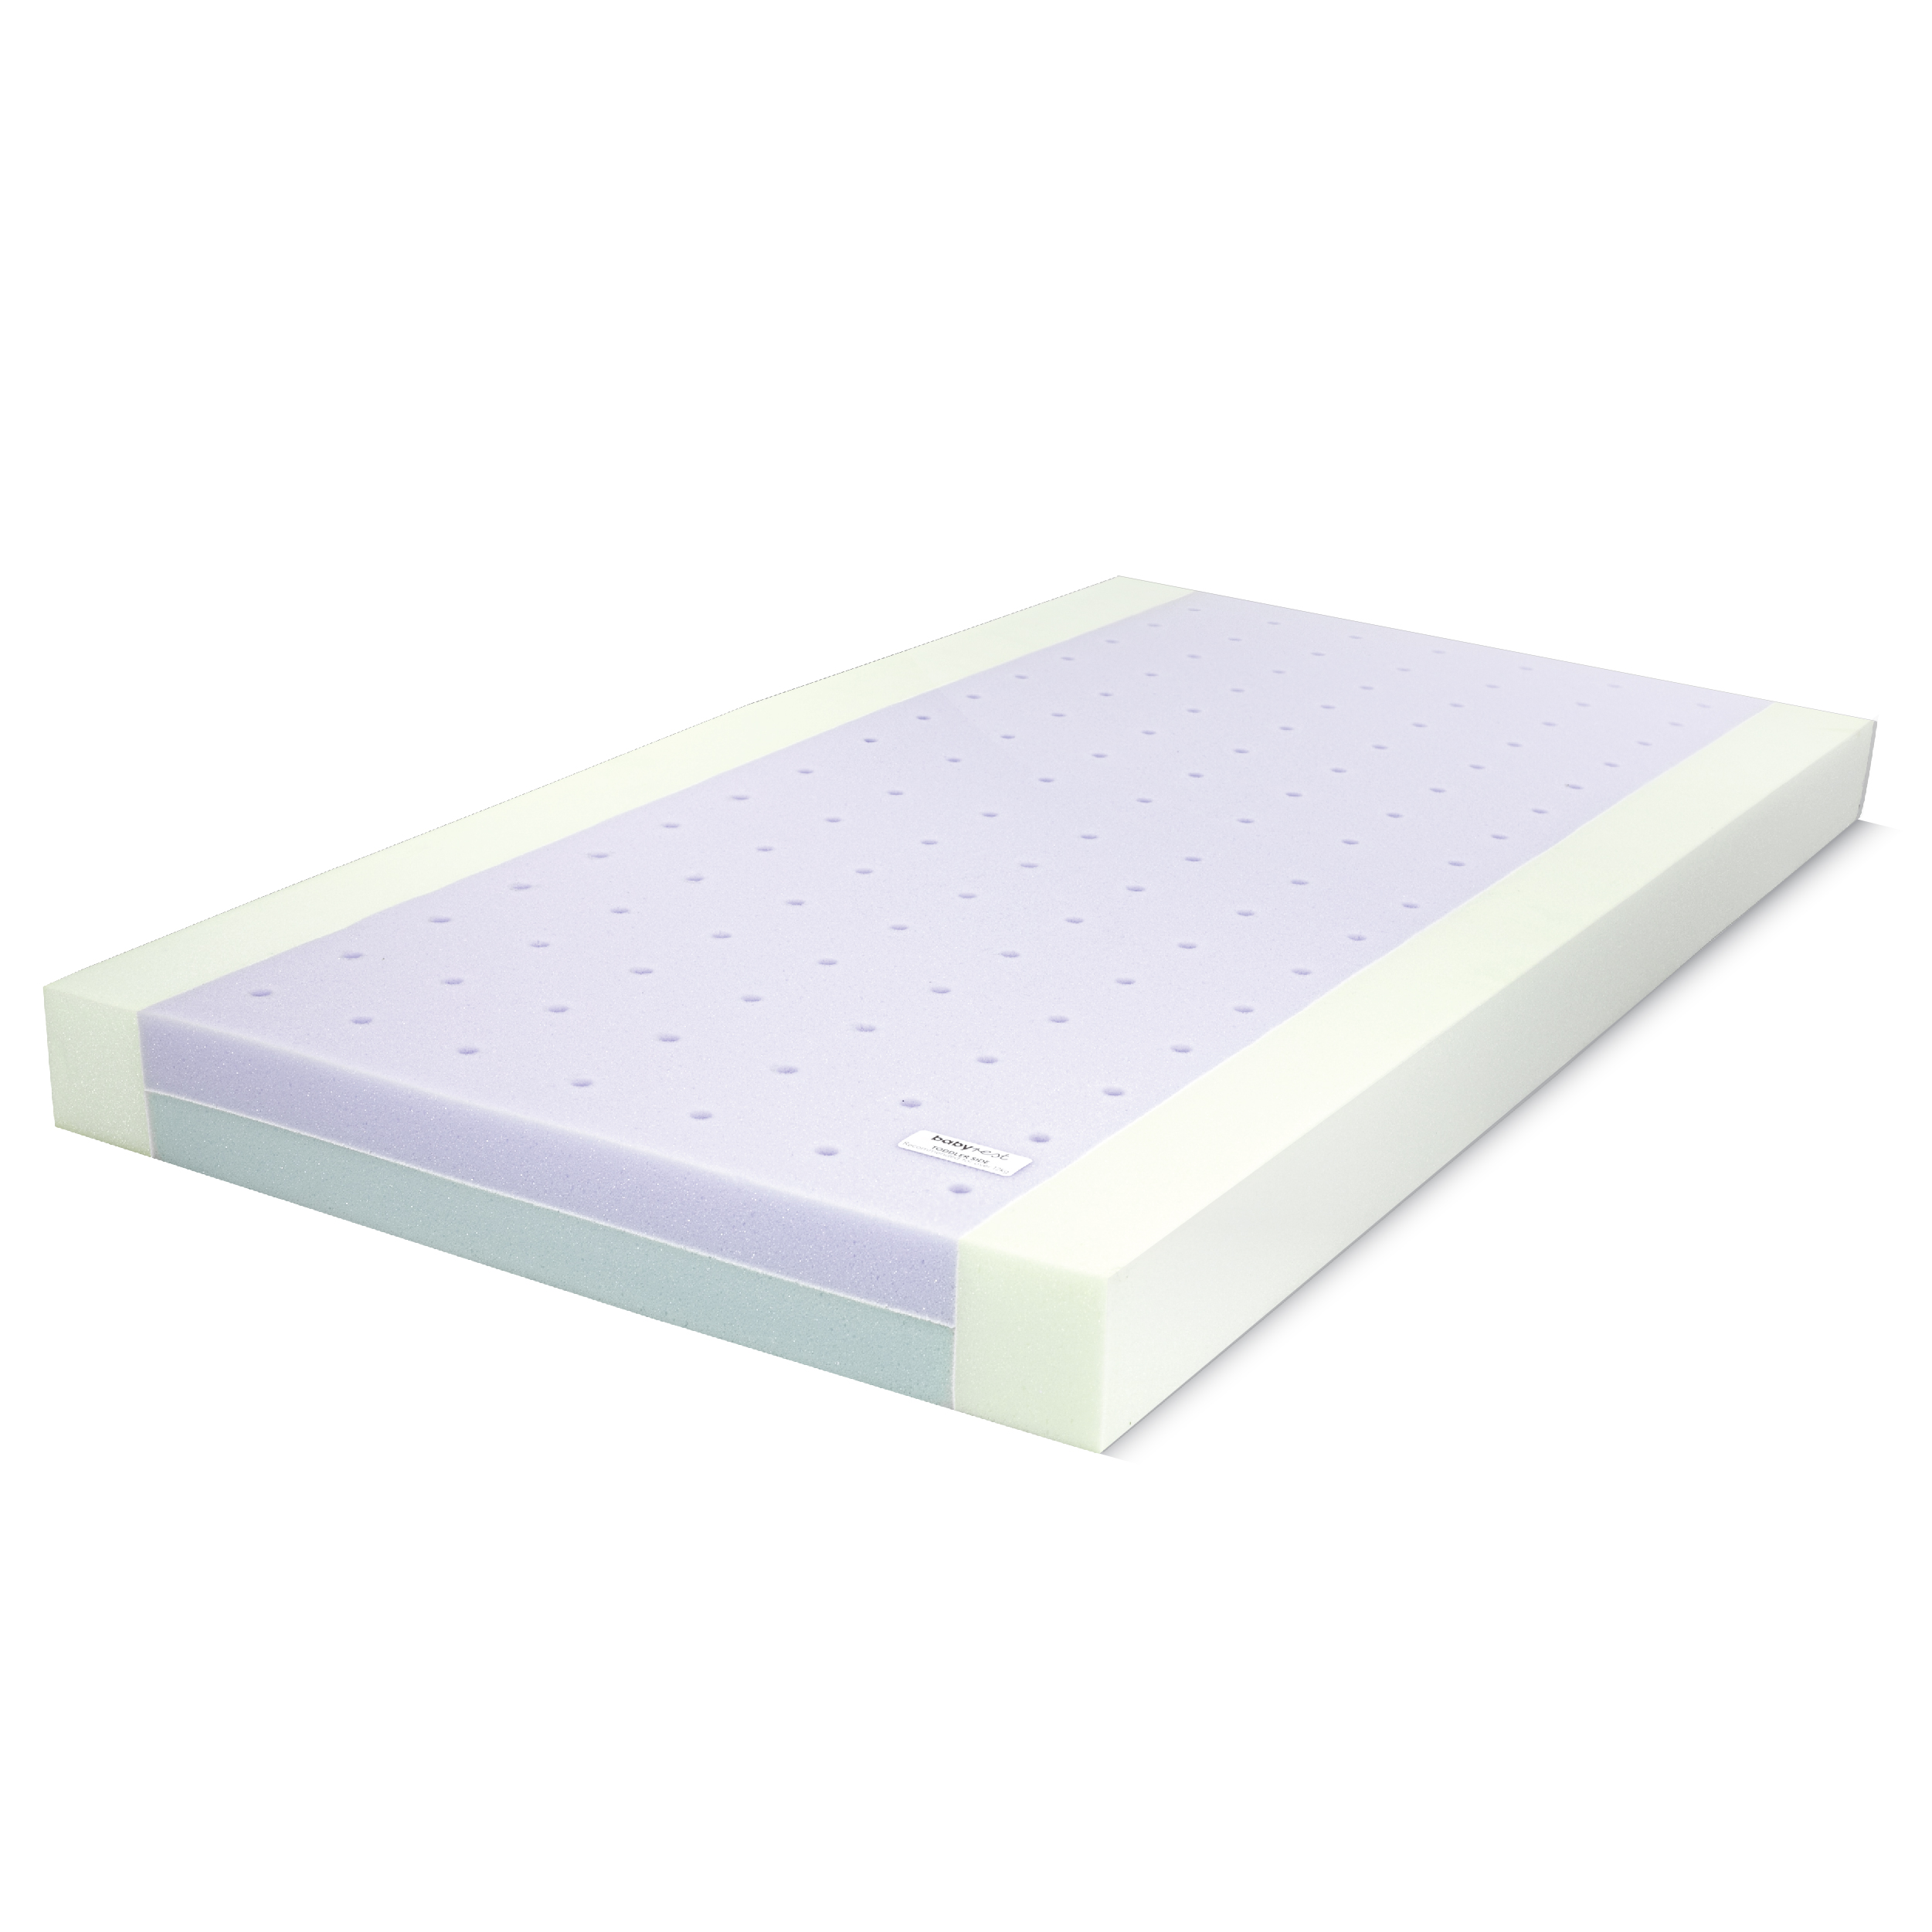 cot mattress 700 x 1400